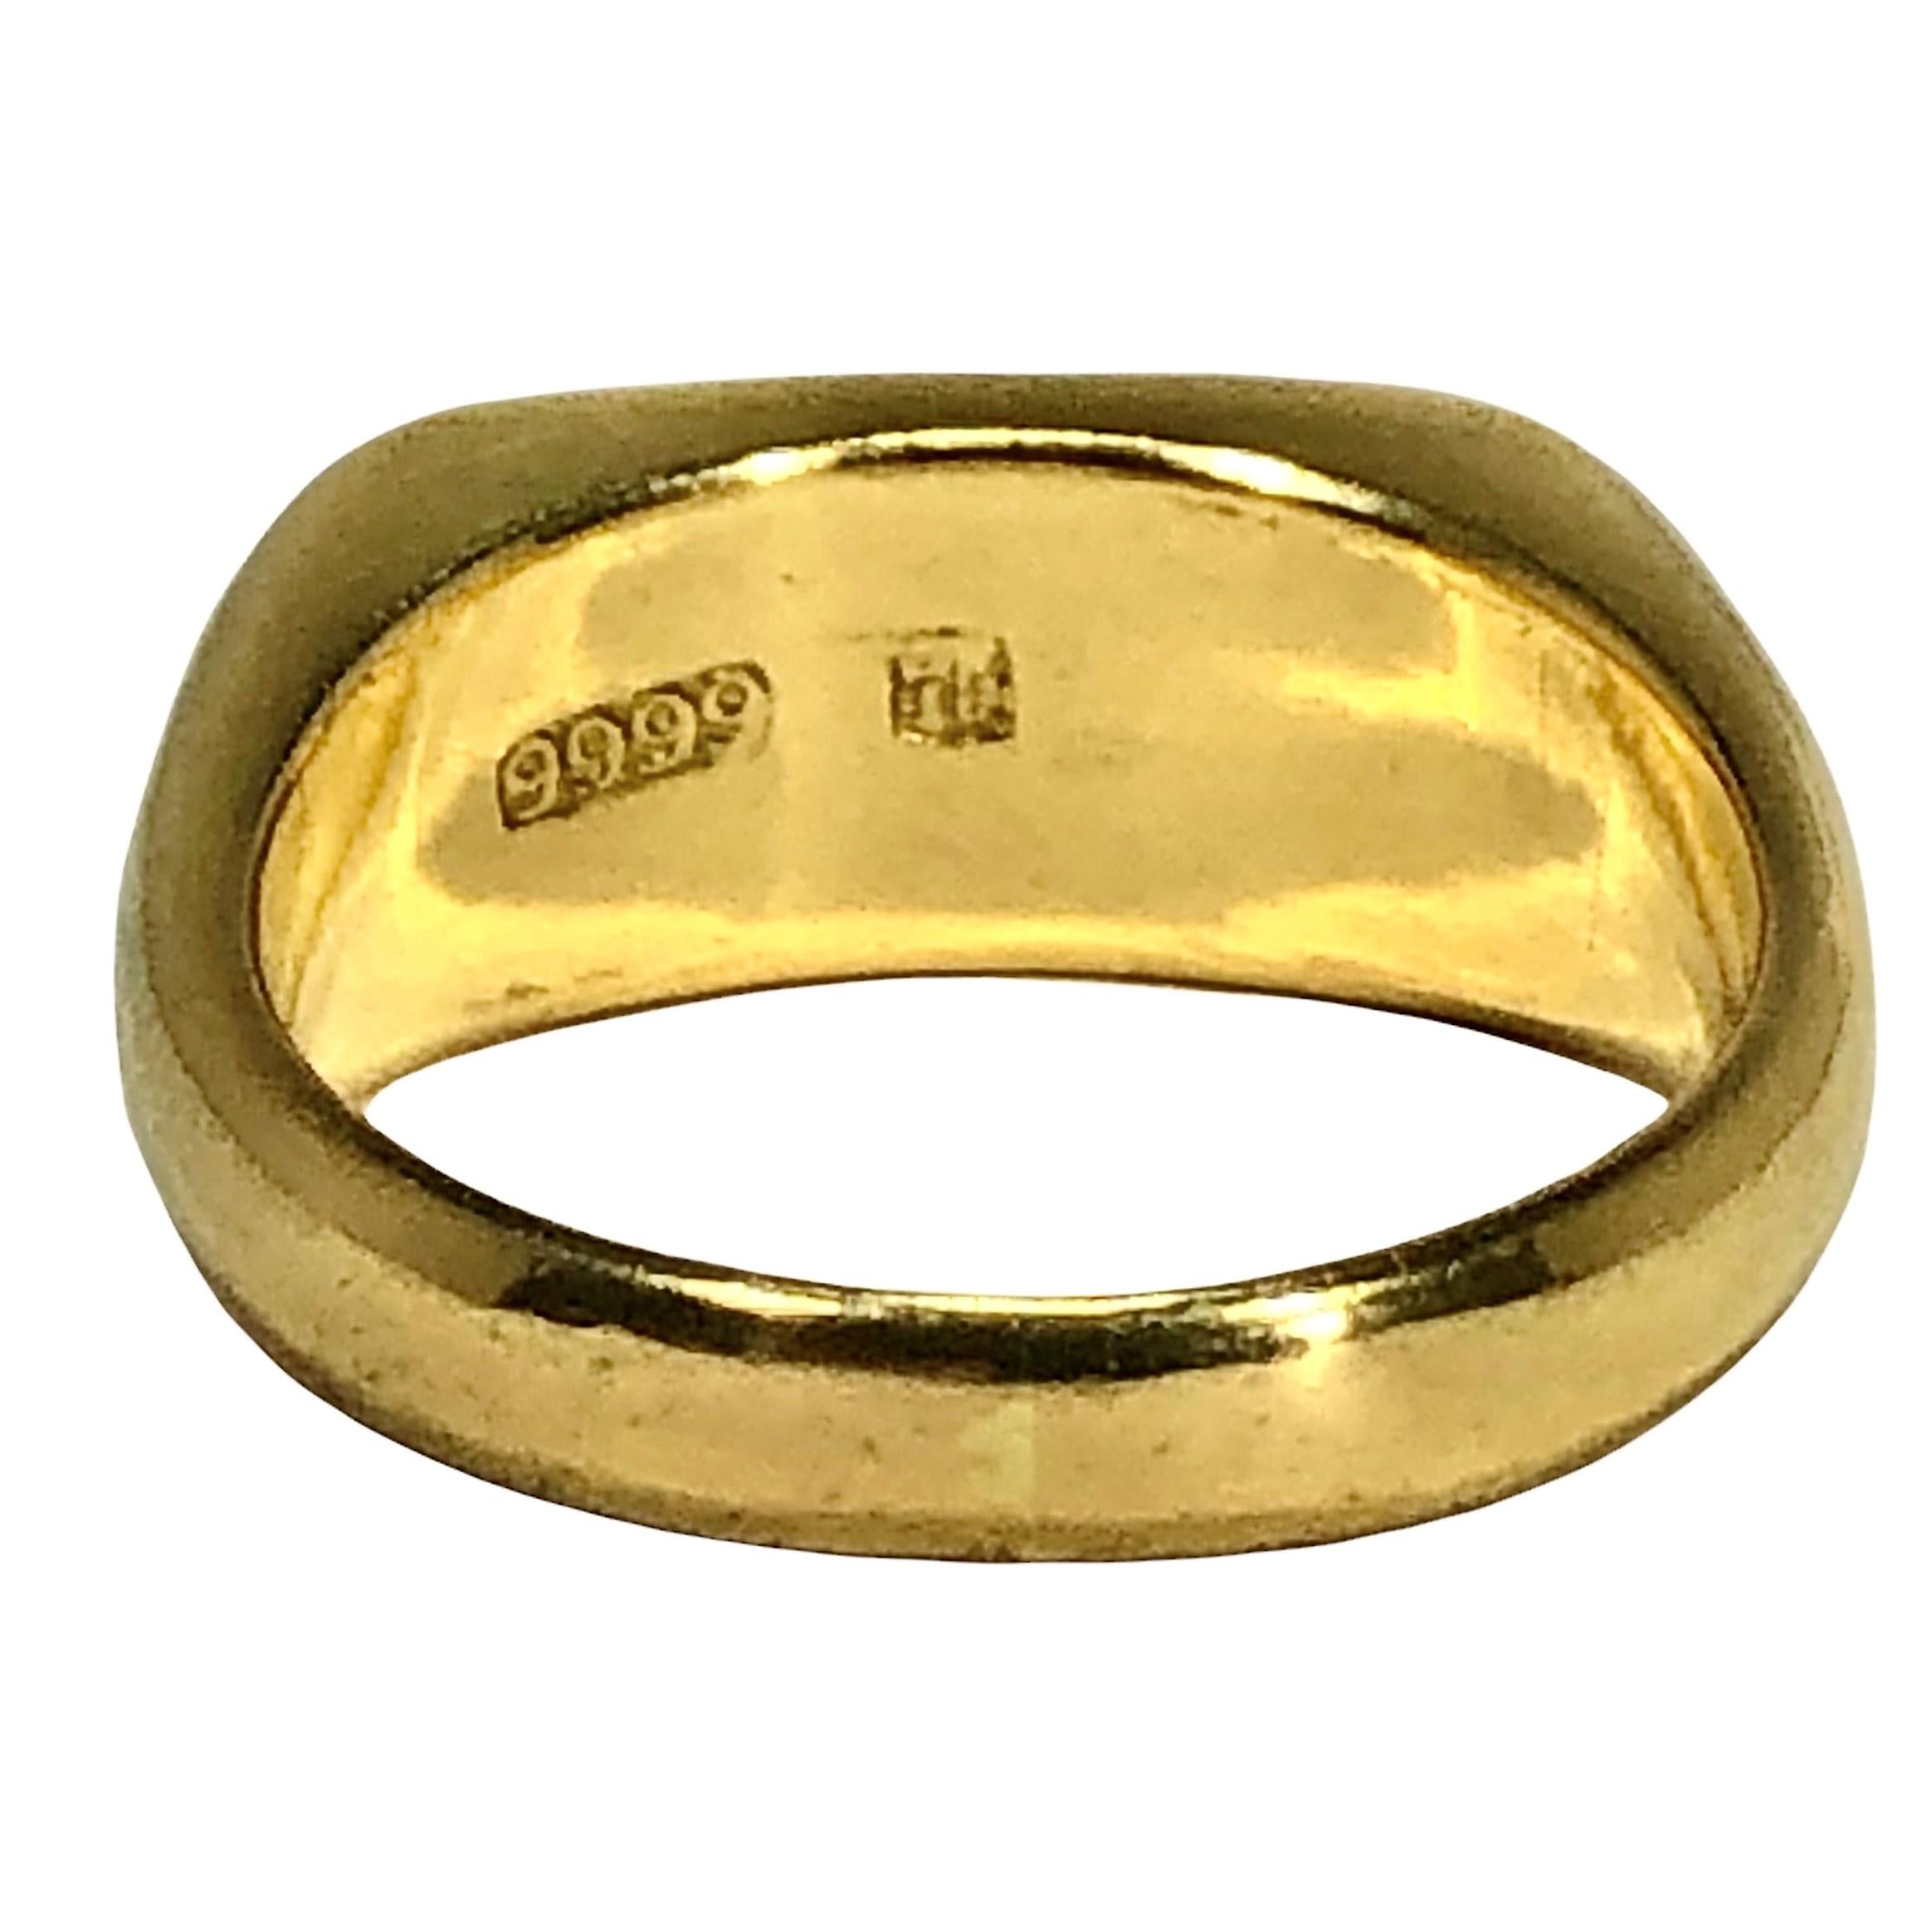 9999 gold ring